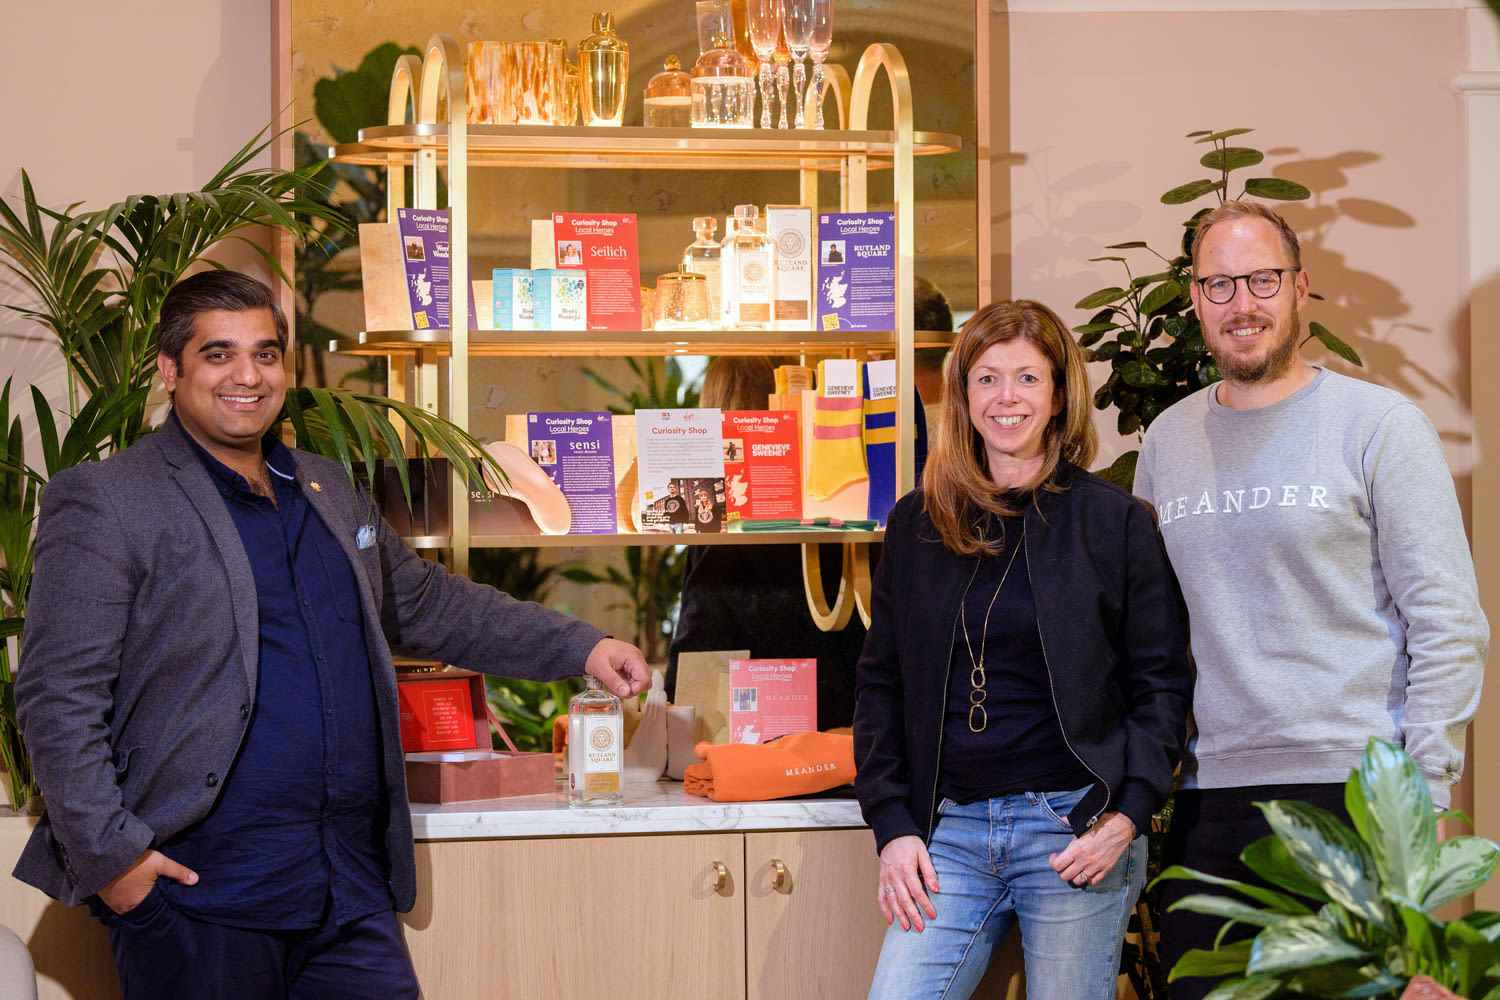 Nishant Sharmer and Jill and Steve Henry next to The Curiosity Shop display at Virgin Hotels Edinburgh